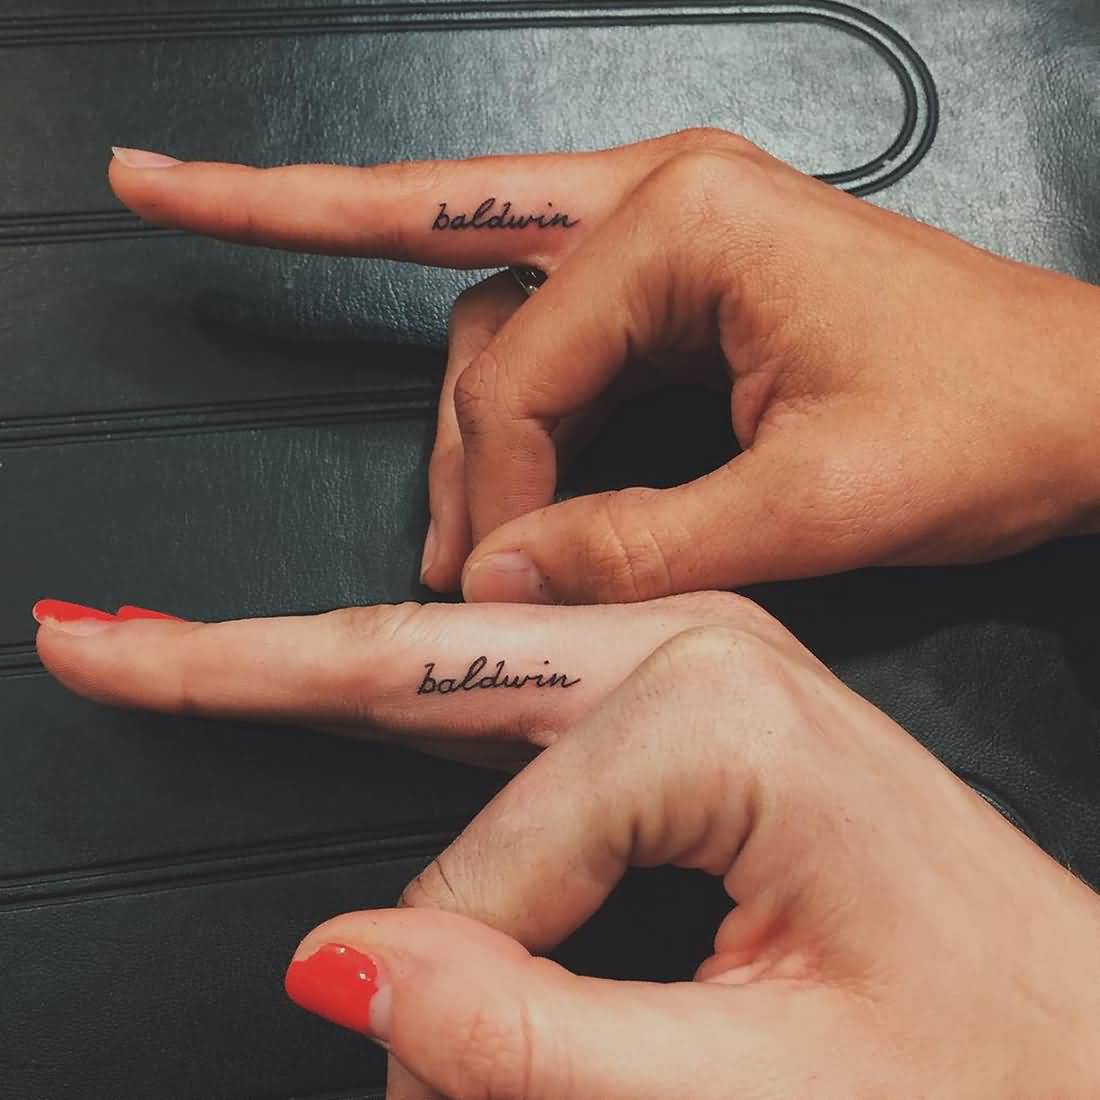 Boldwin Word Matching Tattoos On Fingers